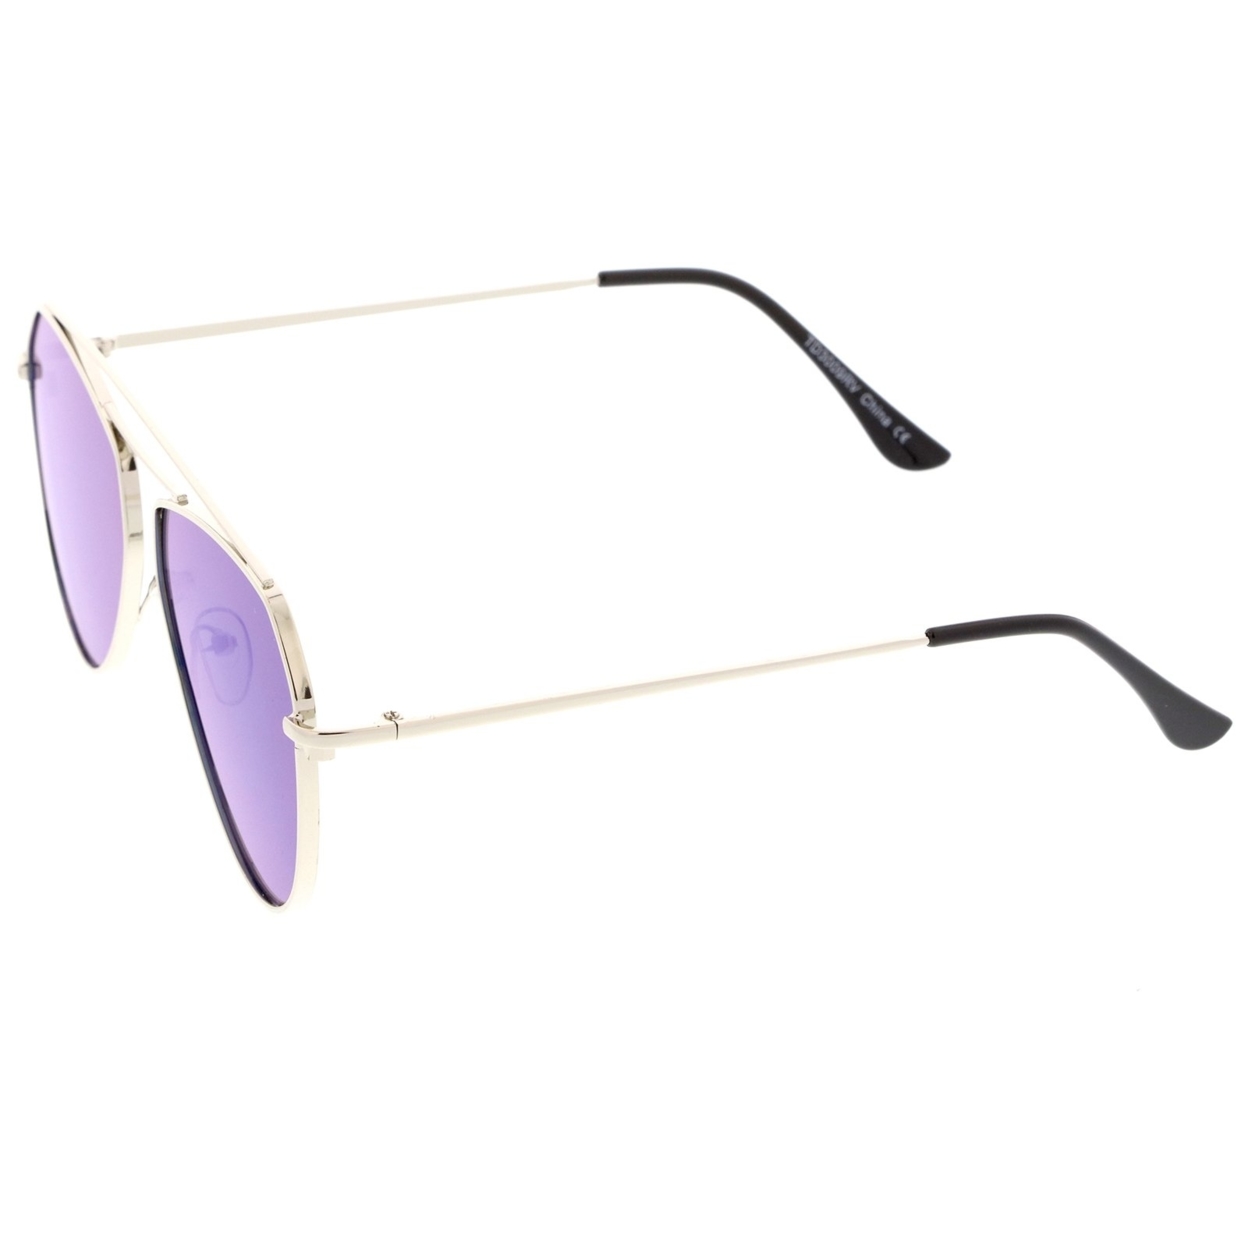 Modern Metal Frame Double Bridge Colored Mirror Flat Lens Aviator Sunglasses 52mm - Silver / Green Mirror